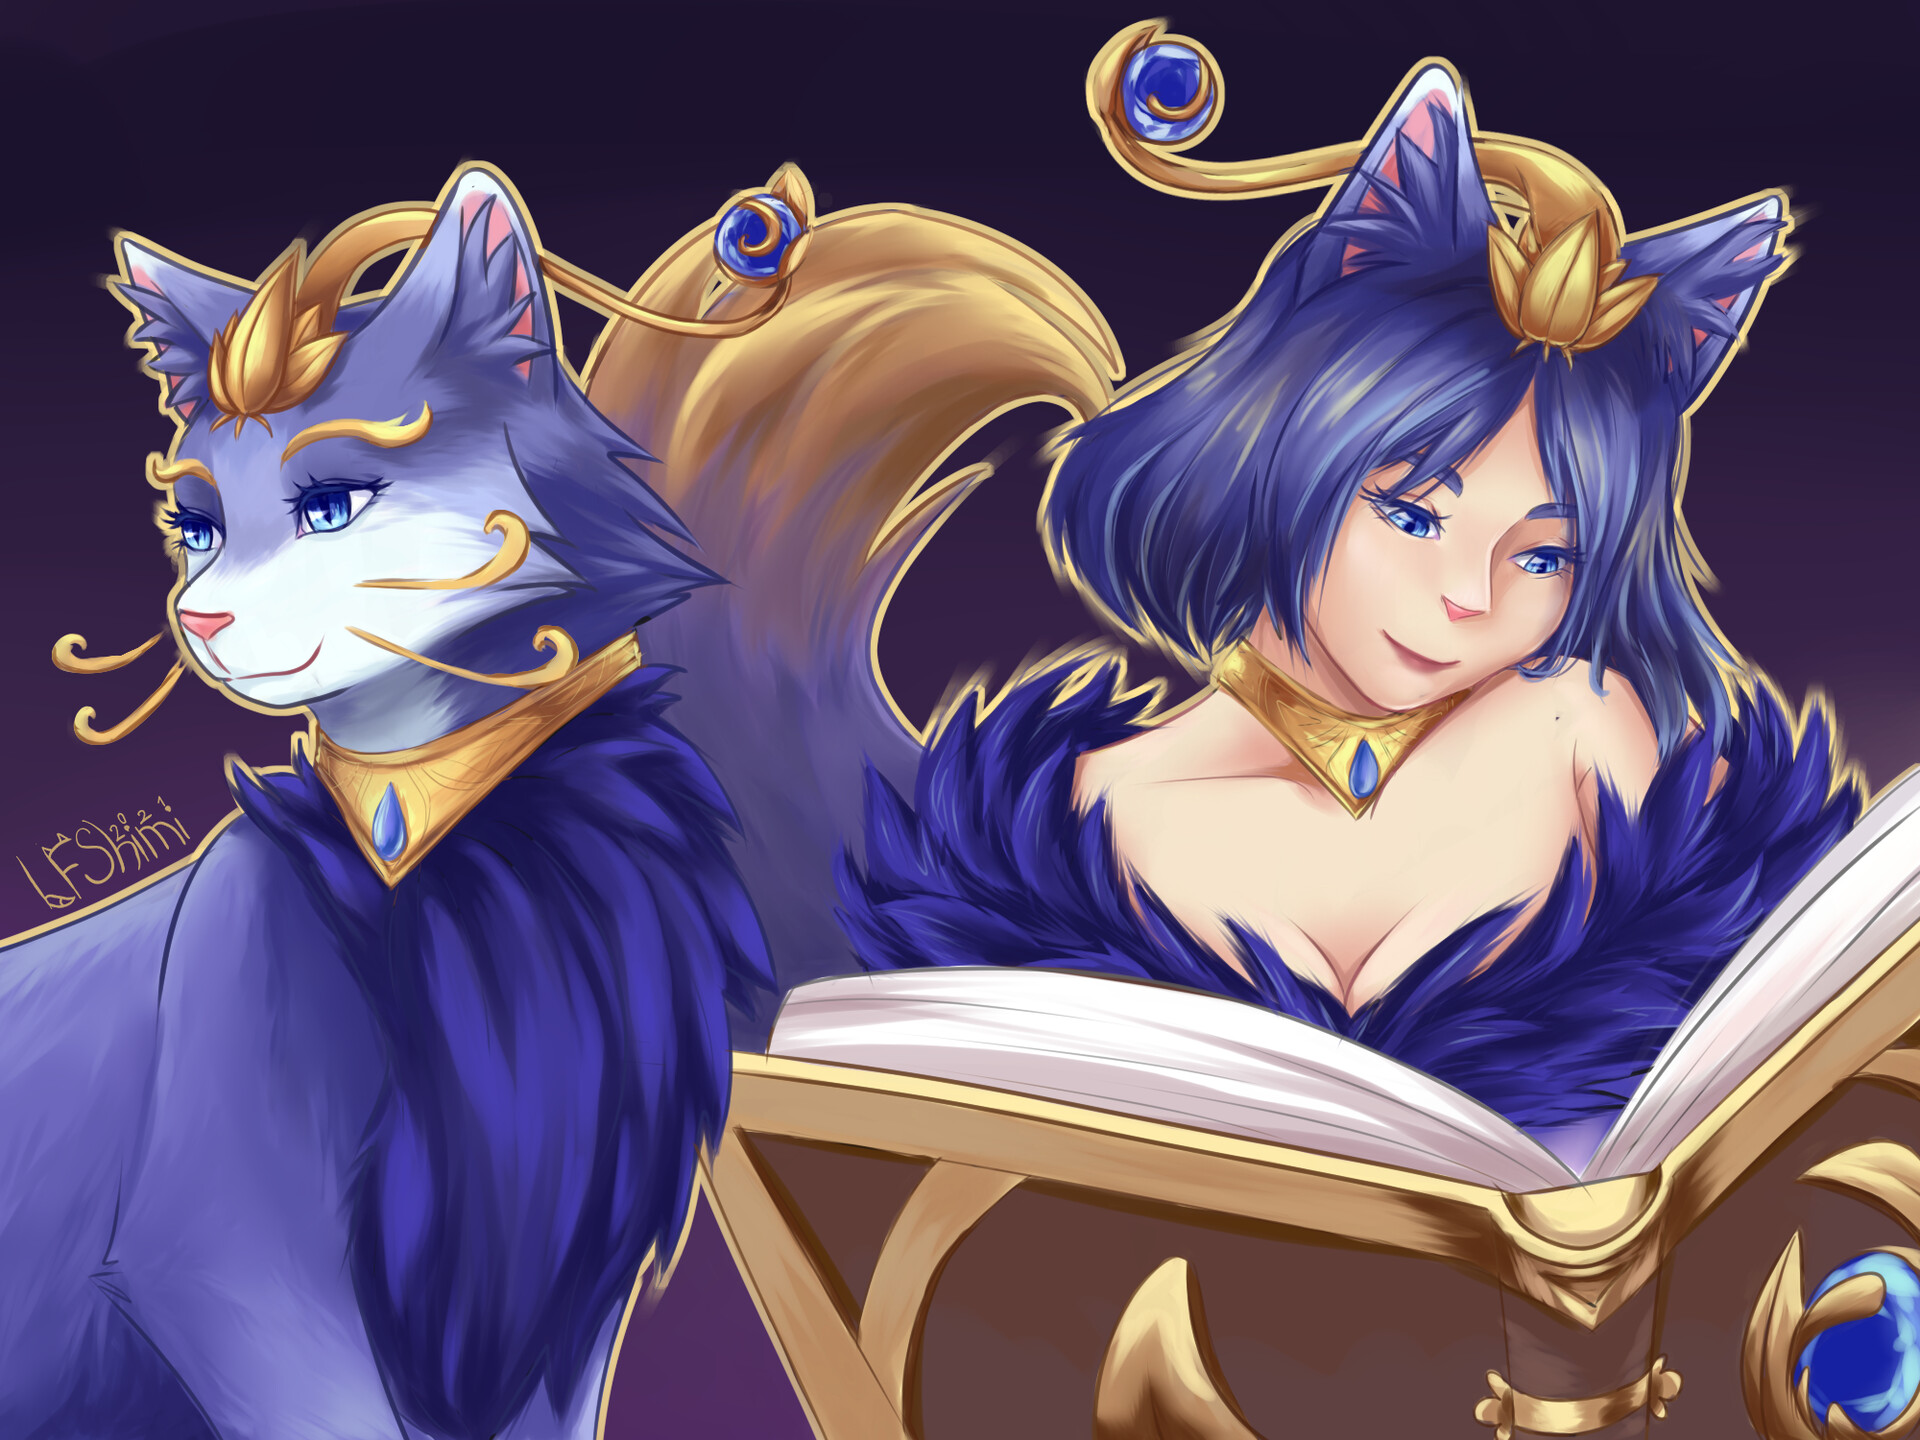 Yuumi, the Magical Cat - League of Legends